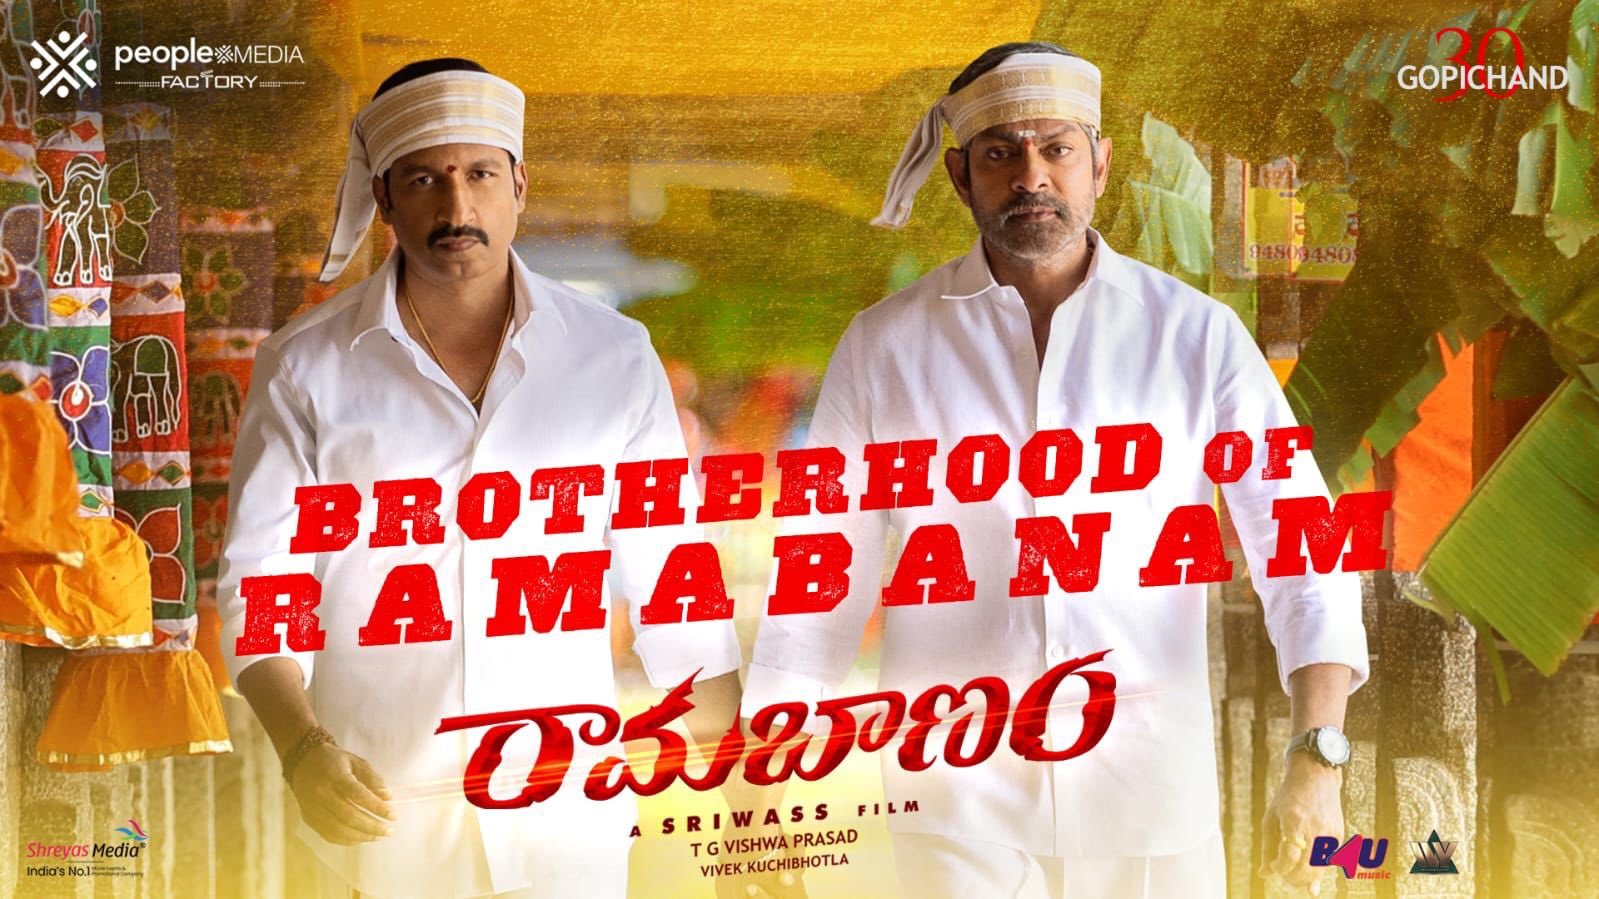 Rama Banam Rama Navami Glimpse shows brotherhood